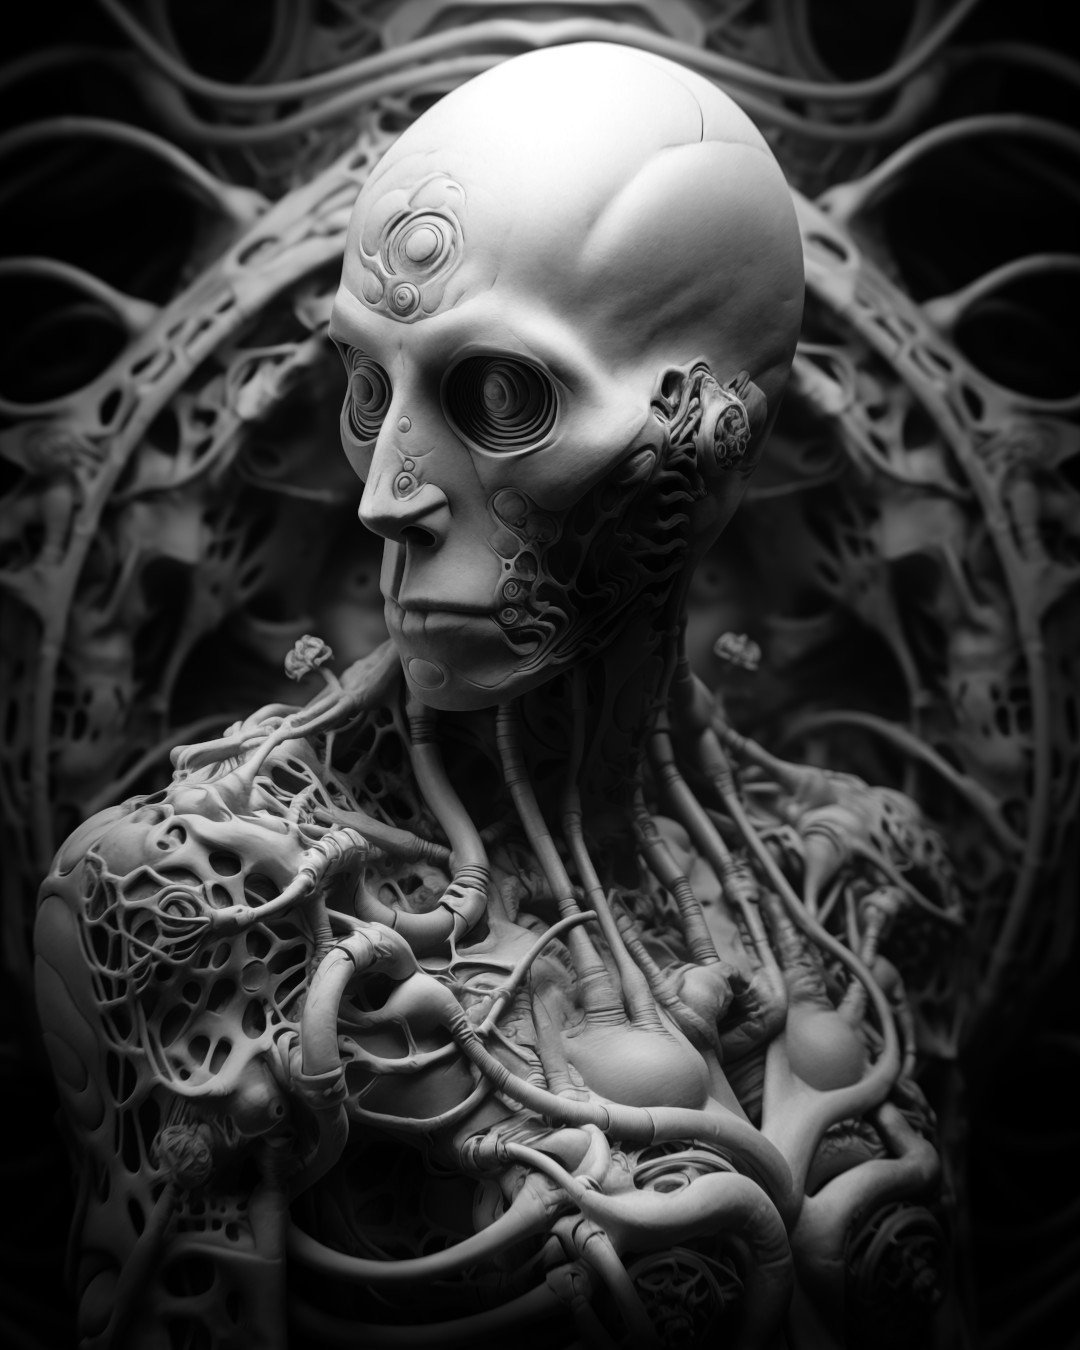 Intricate creature, organic cyberpunk realism, monochrome portrait